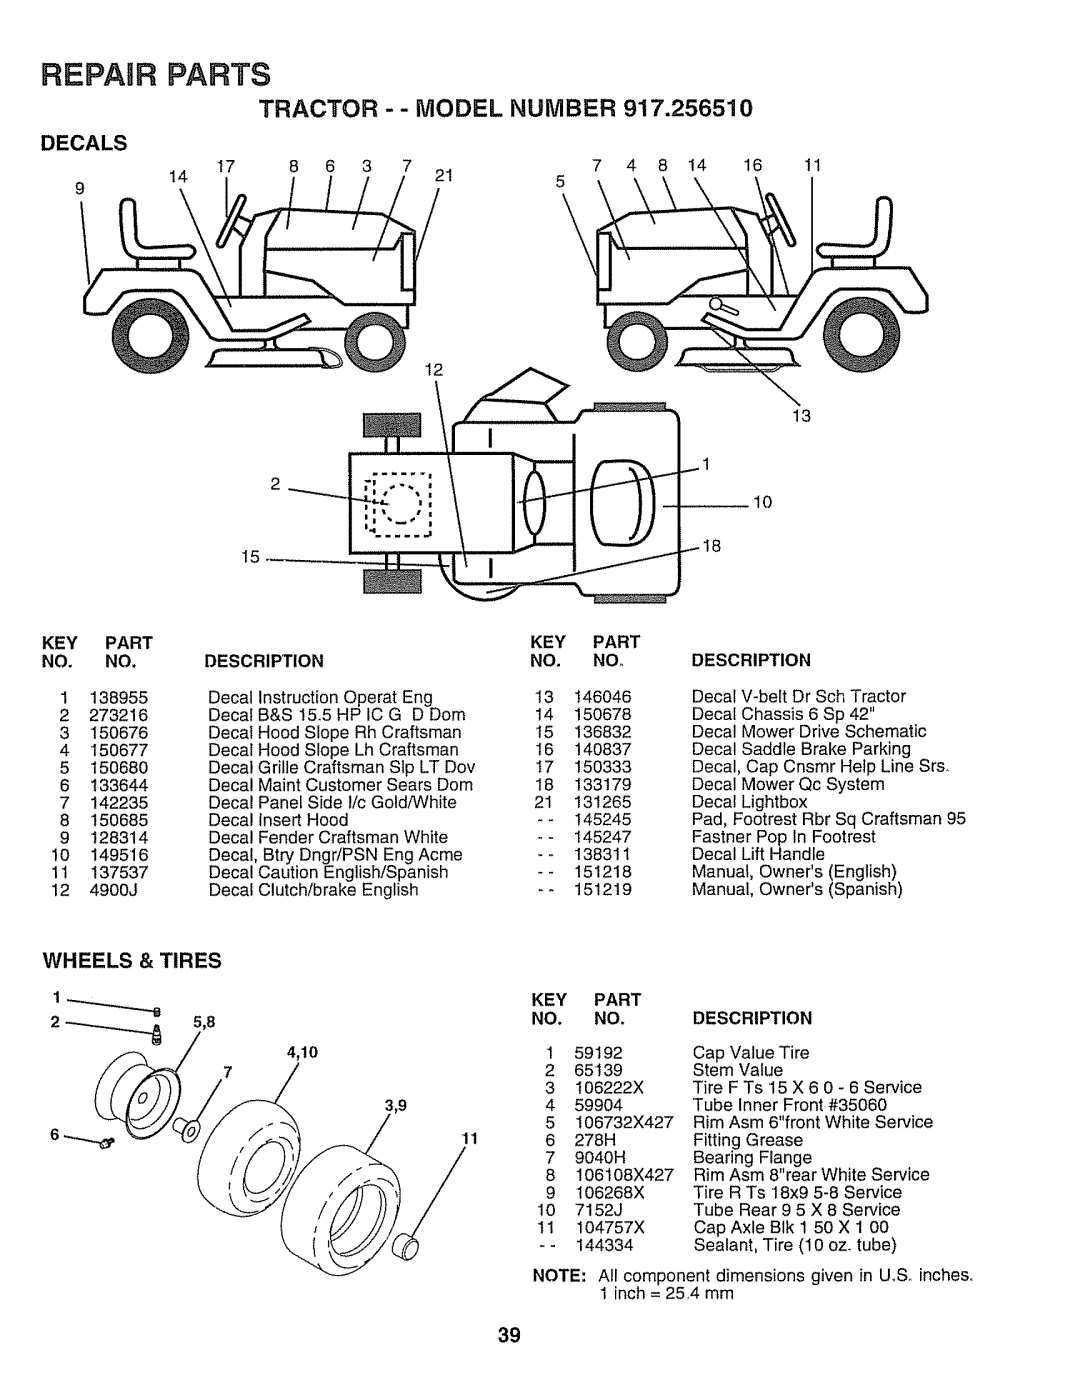 Craftsman 917.25651 owner manual Reparrparts, Tractor -- Model Number, Description, insert Hood, Key Part 